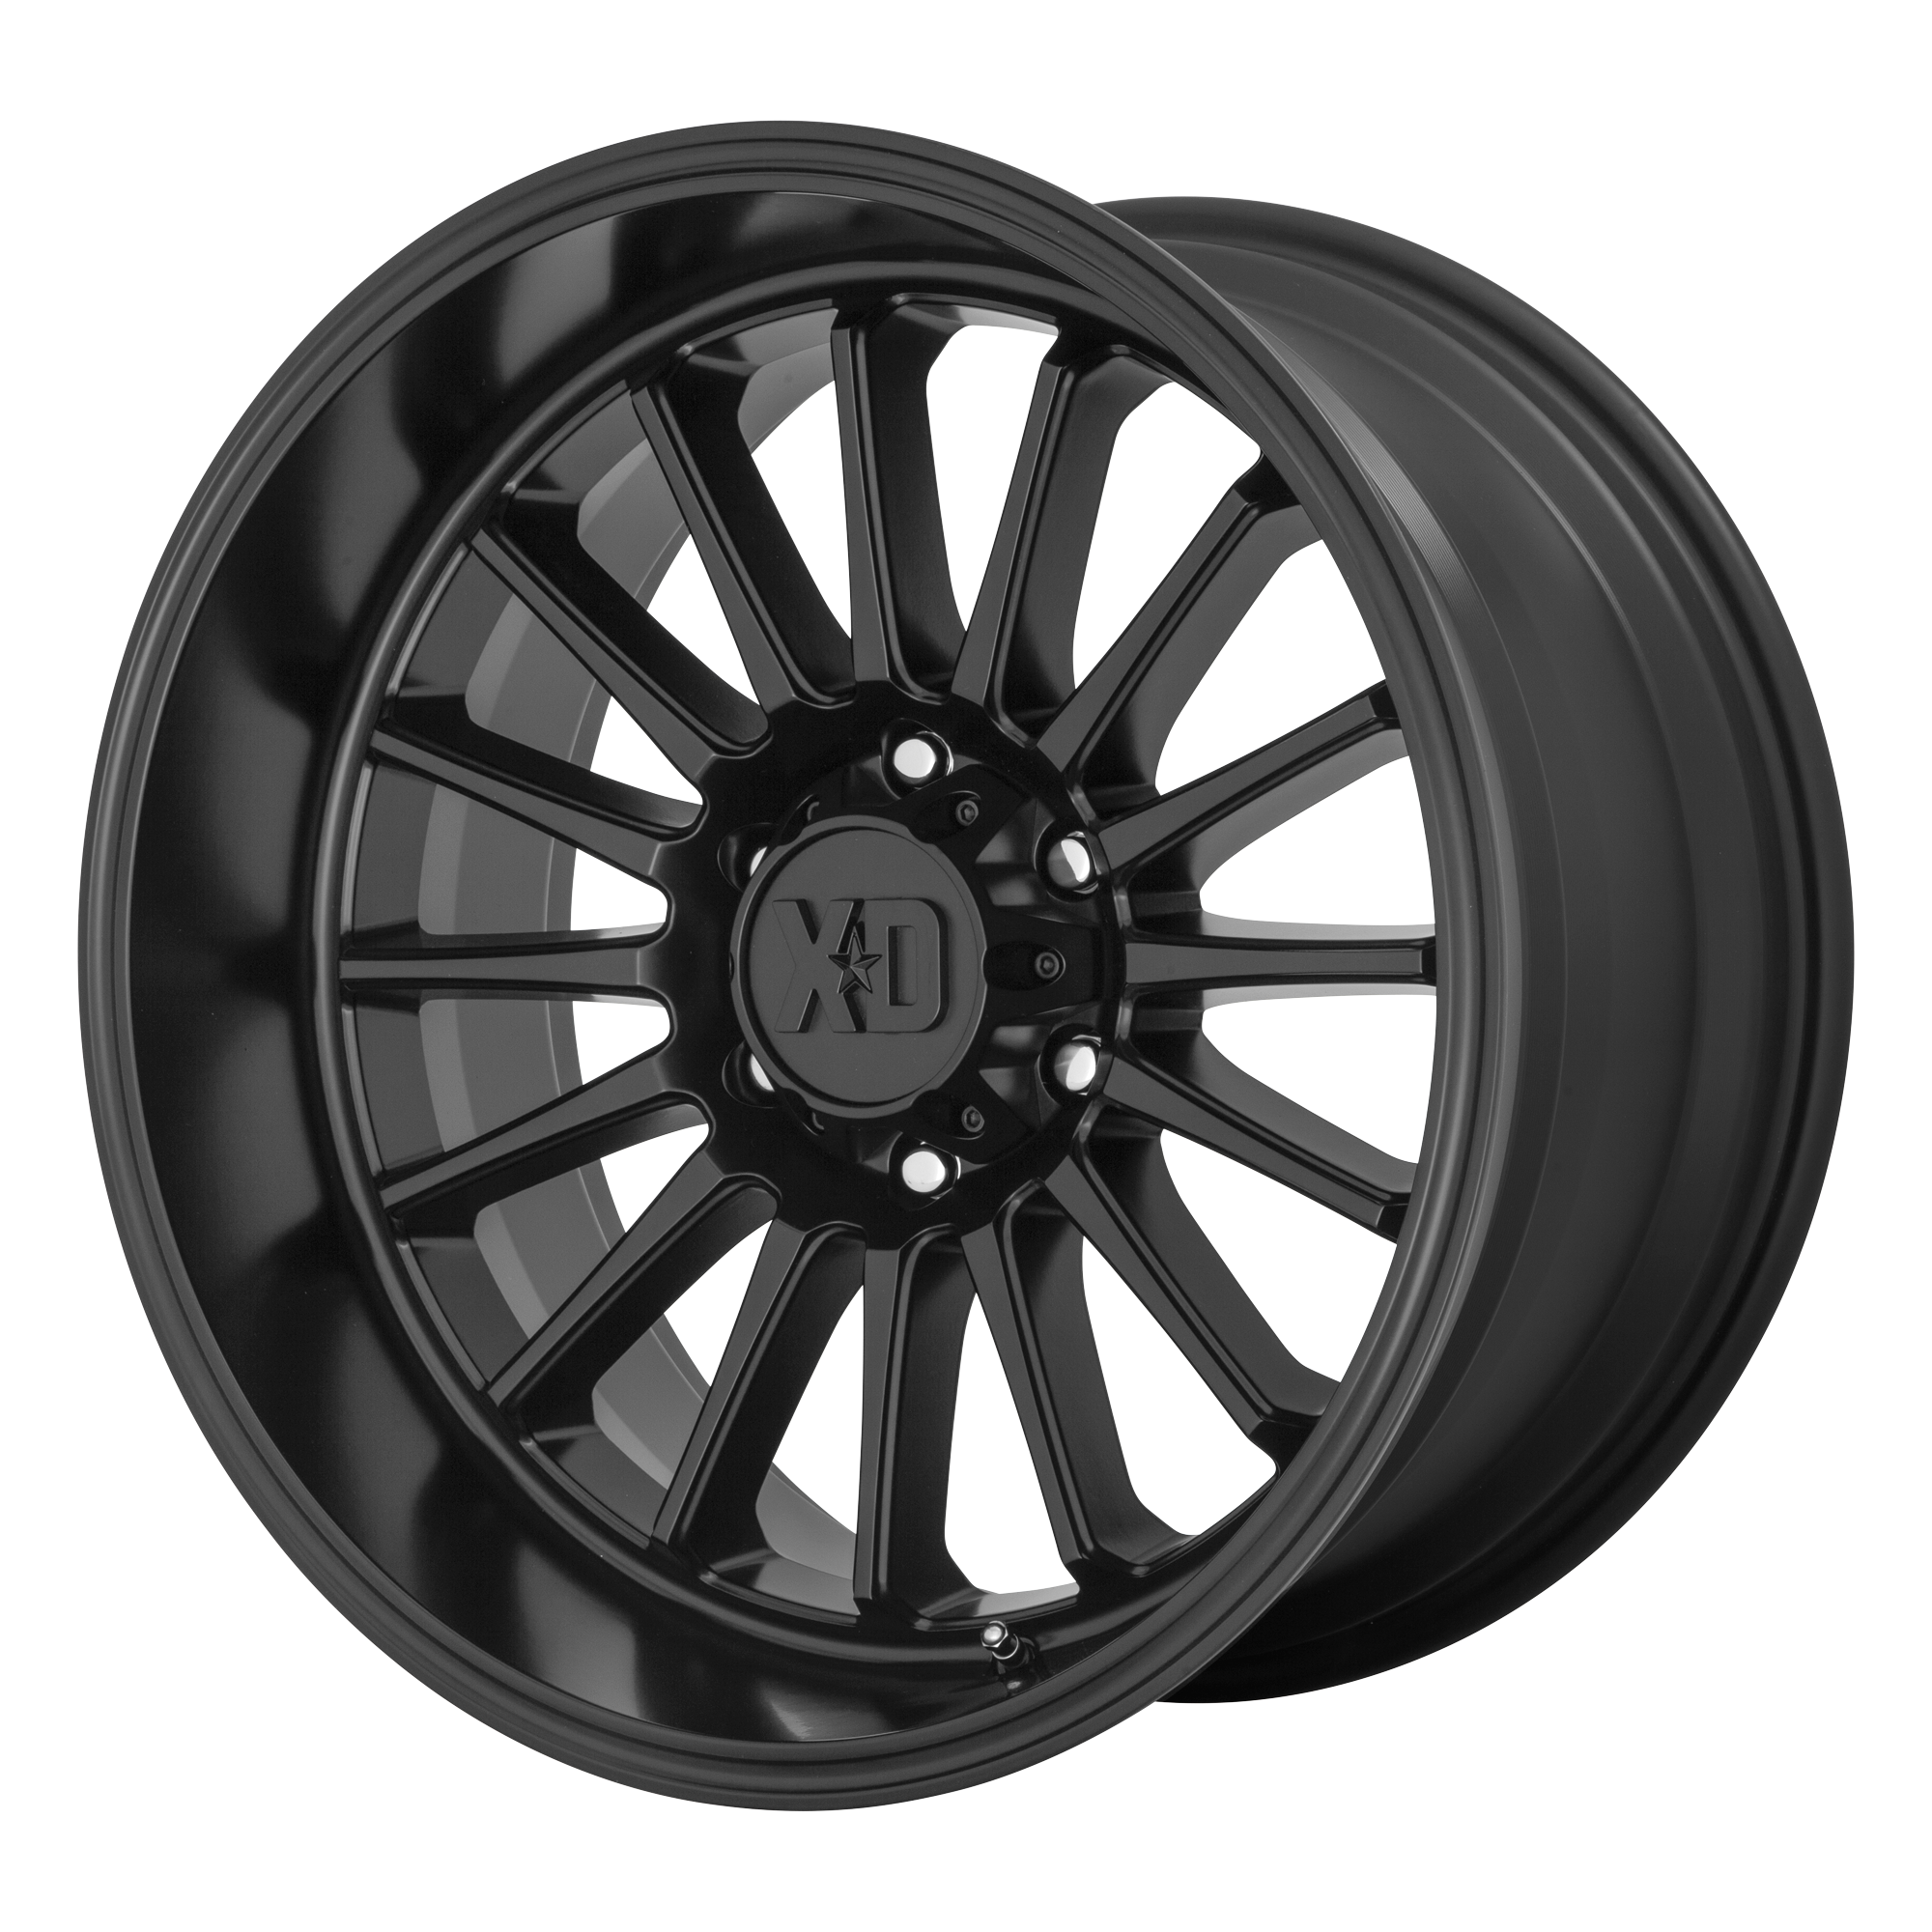 XD 22"x10" Non-Chrome Satin Black Custom Wheel ARSWCWXD85722050718N